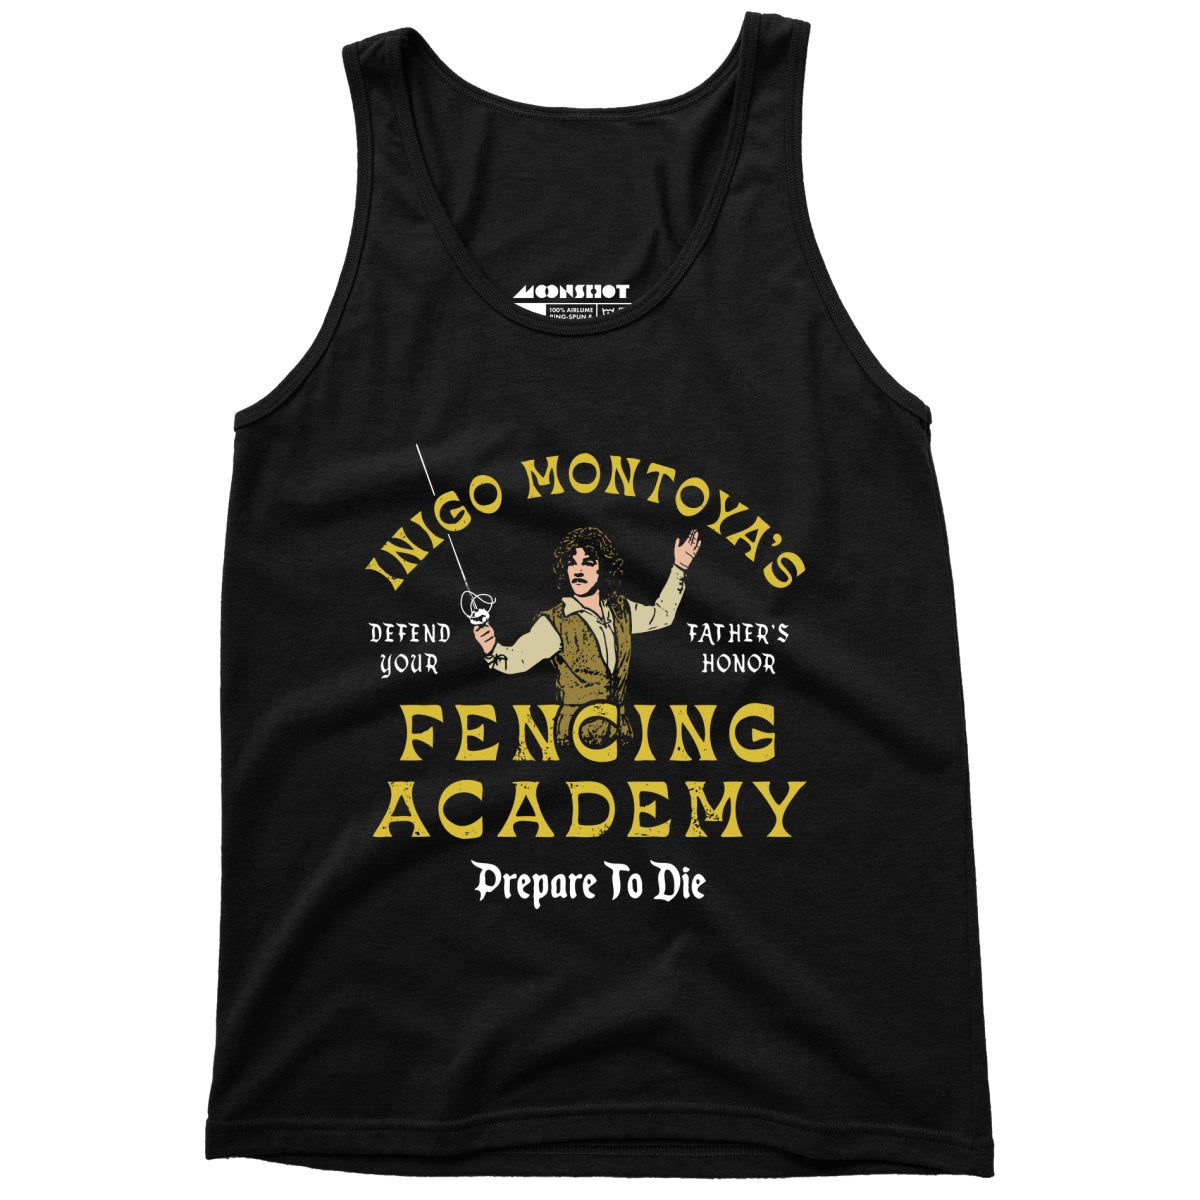 Inigo Montoya's Fencing Academy - Unisex Tank Top